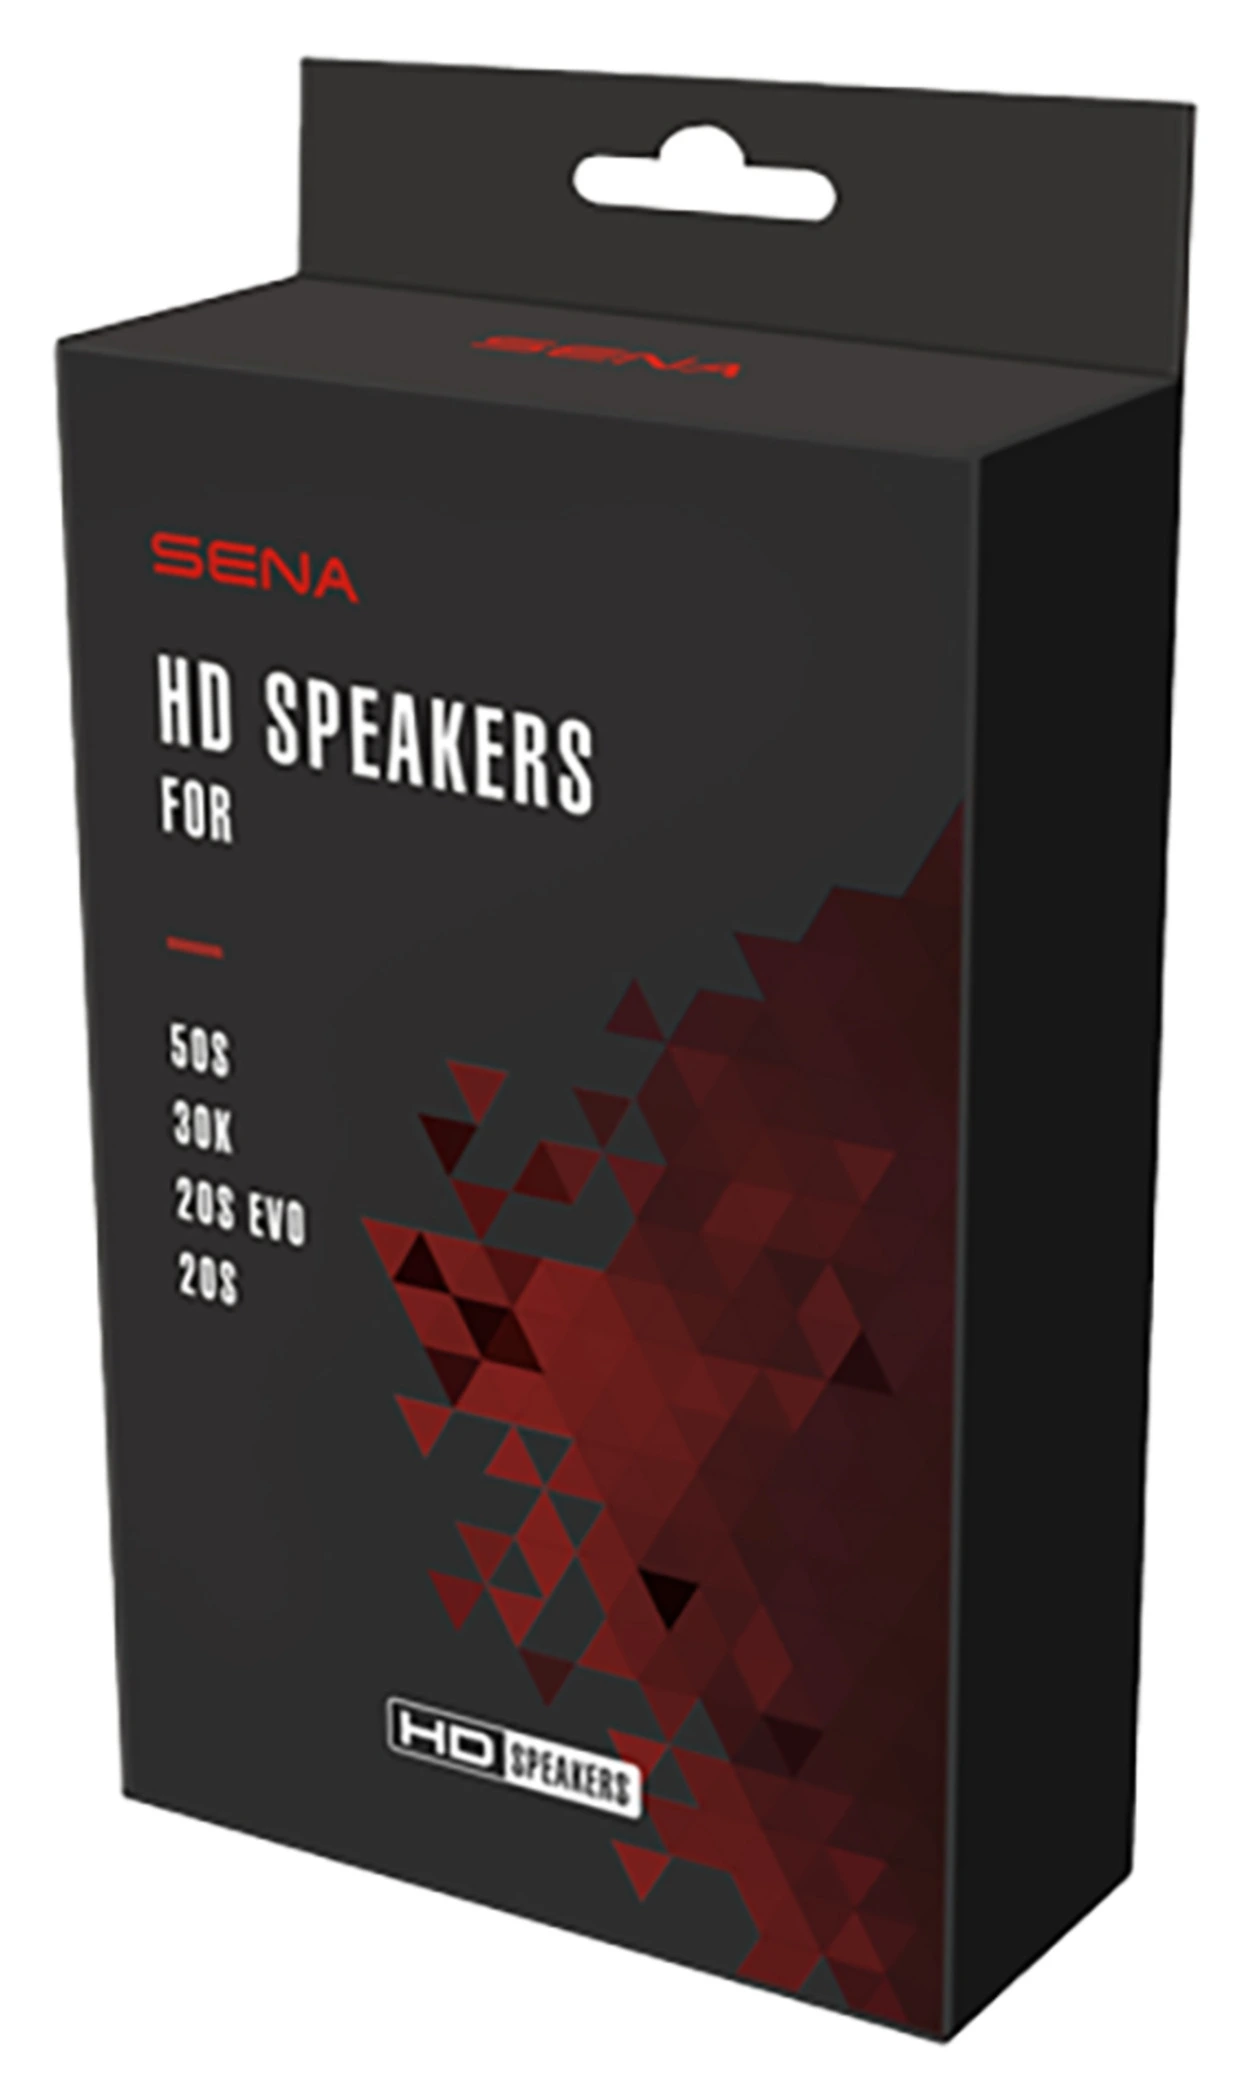 SENA HD SPEAKERS